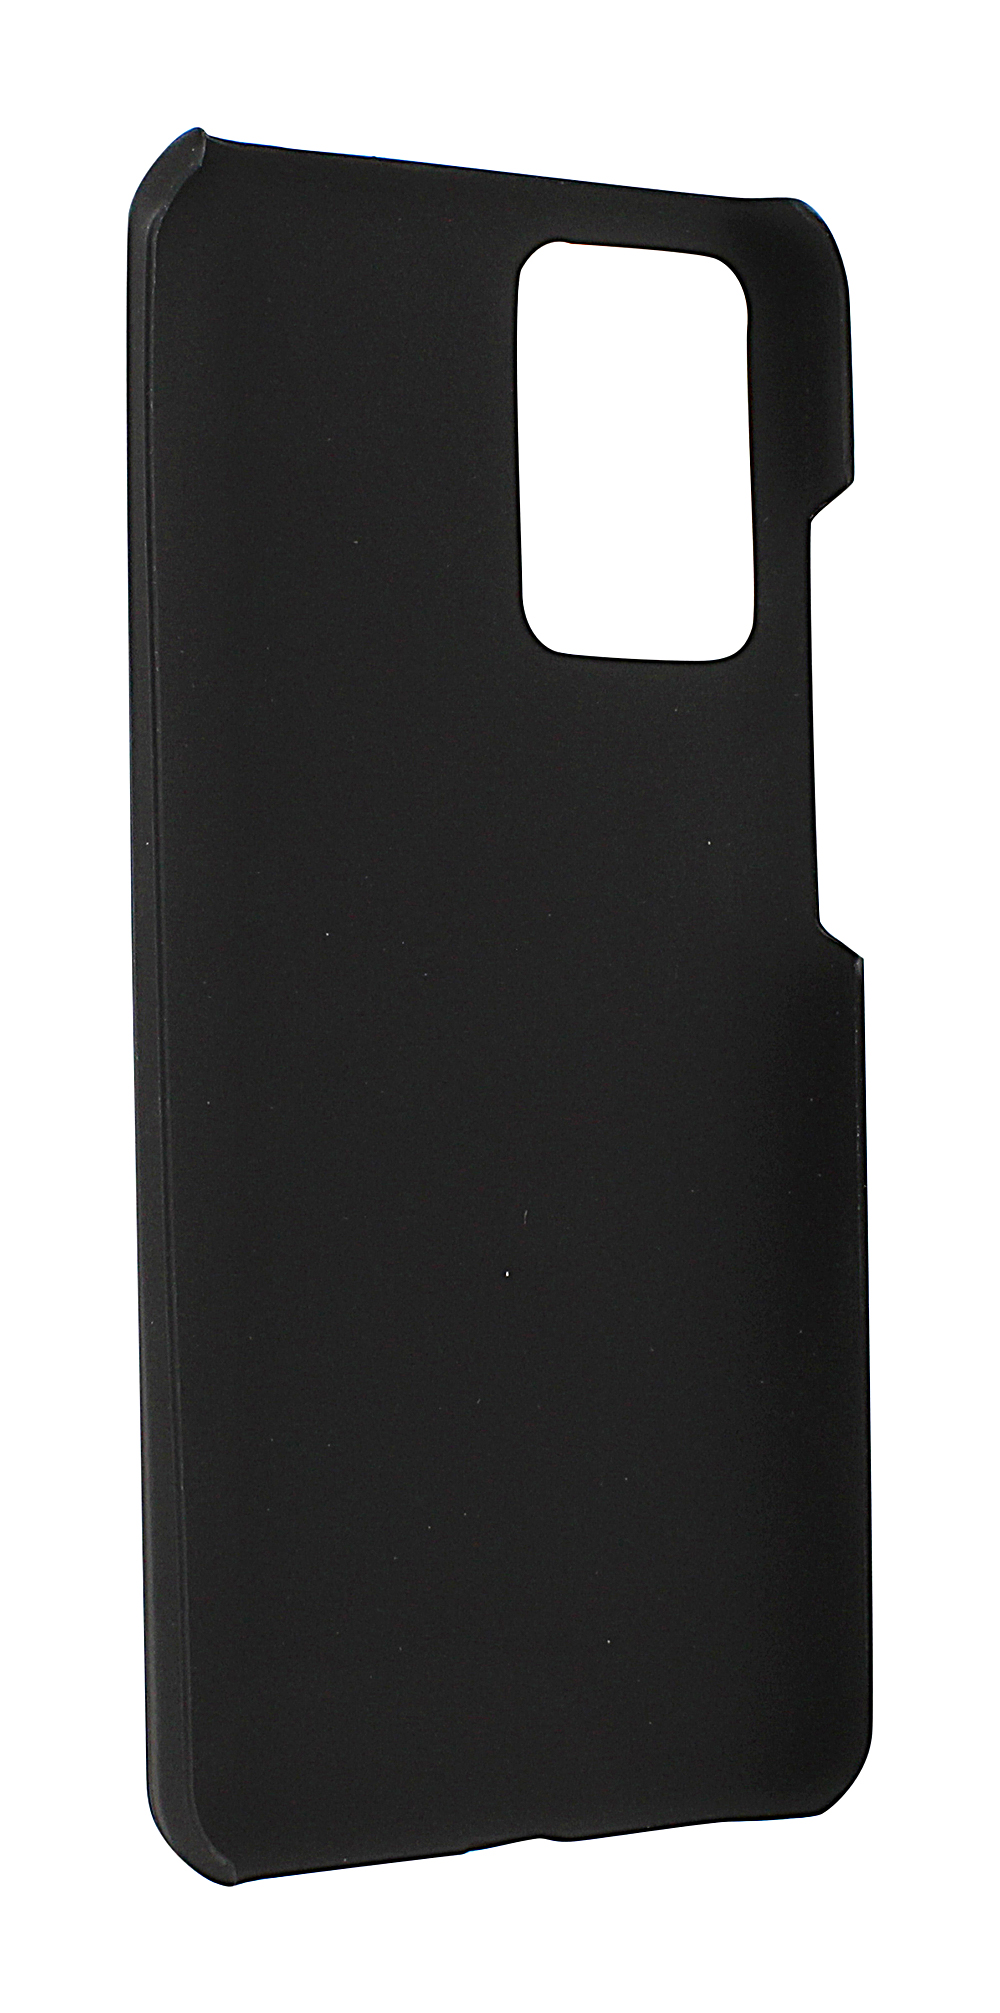 Skimblocker XL Magnet Wallet Xiaomi Redmi 10 NFC